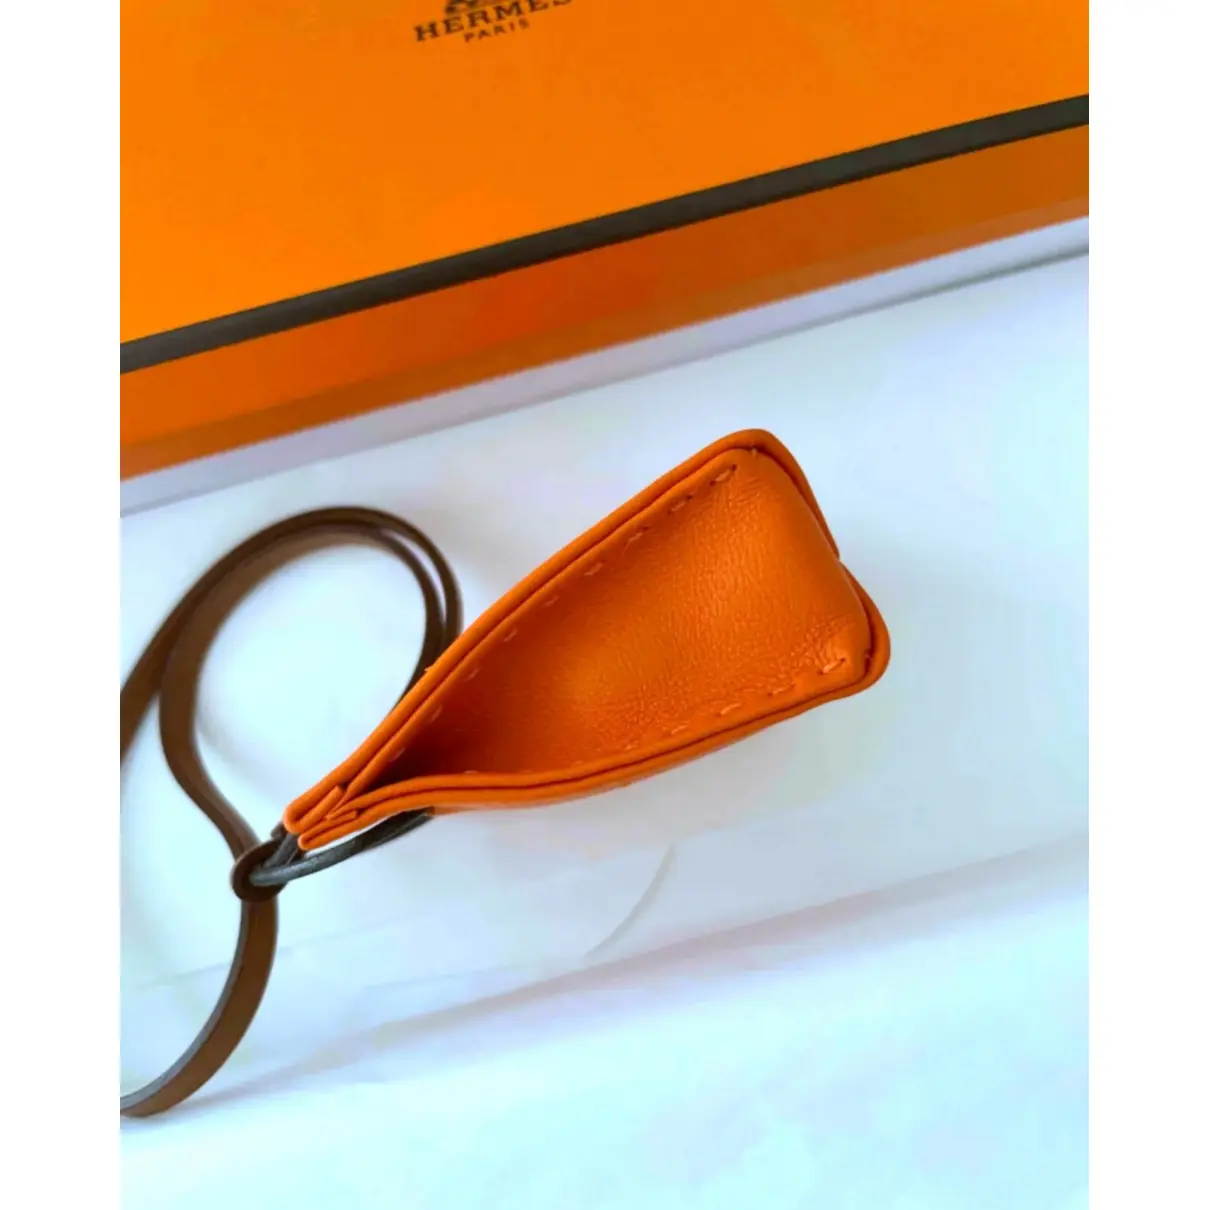 Buy Hermès Shopping bag charm leather bag charm online